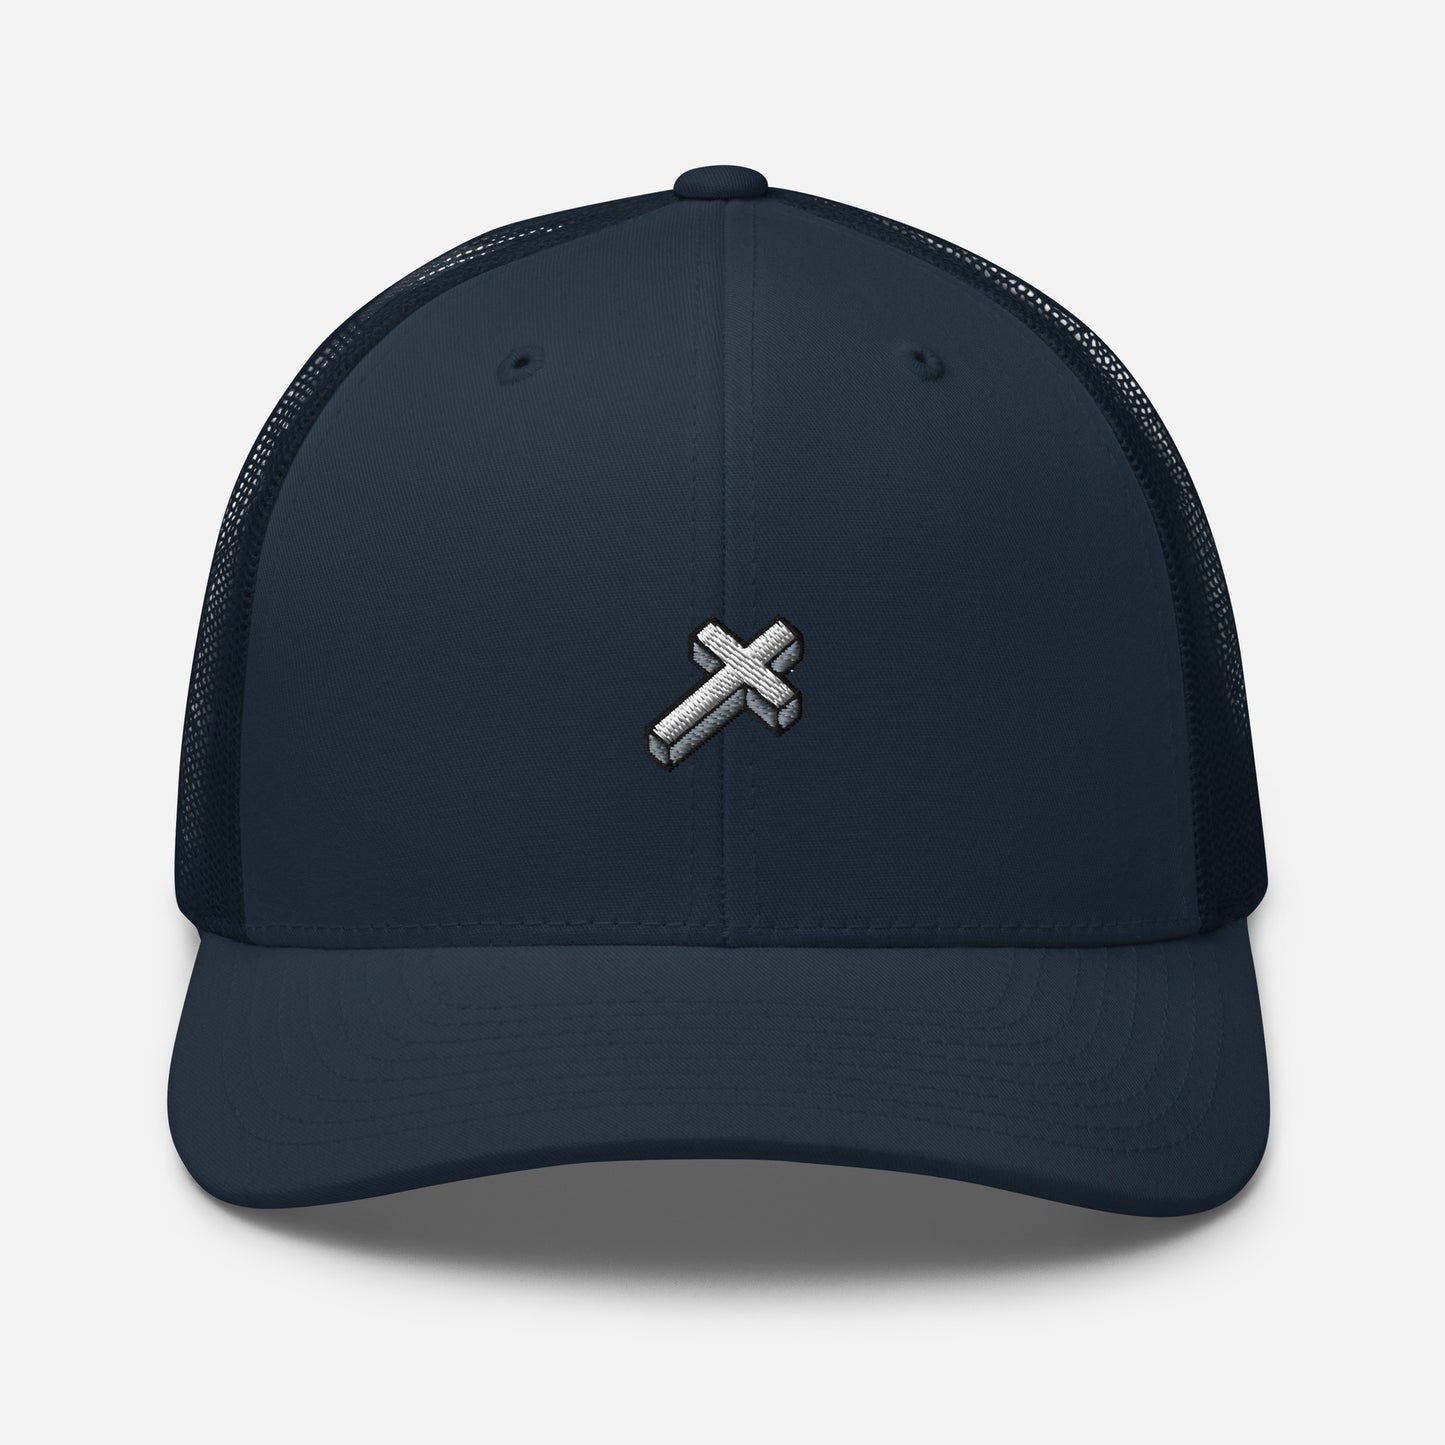 Mesh Cap with Cross Symbol